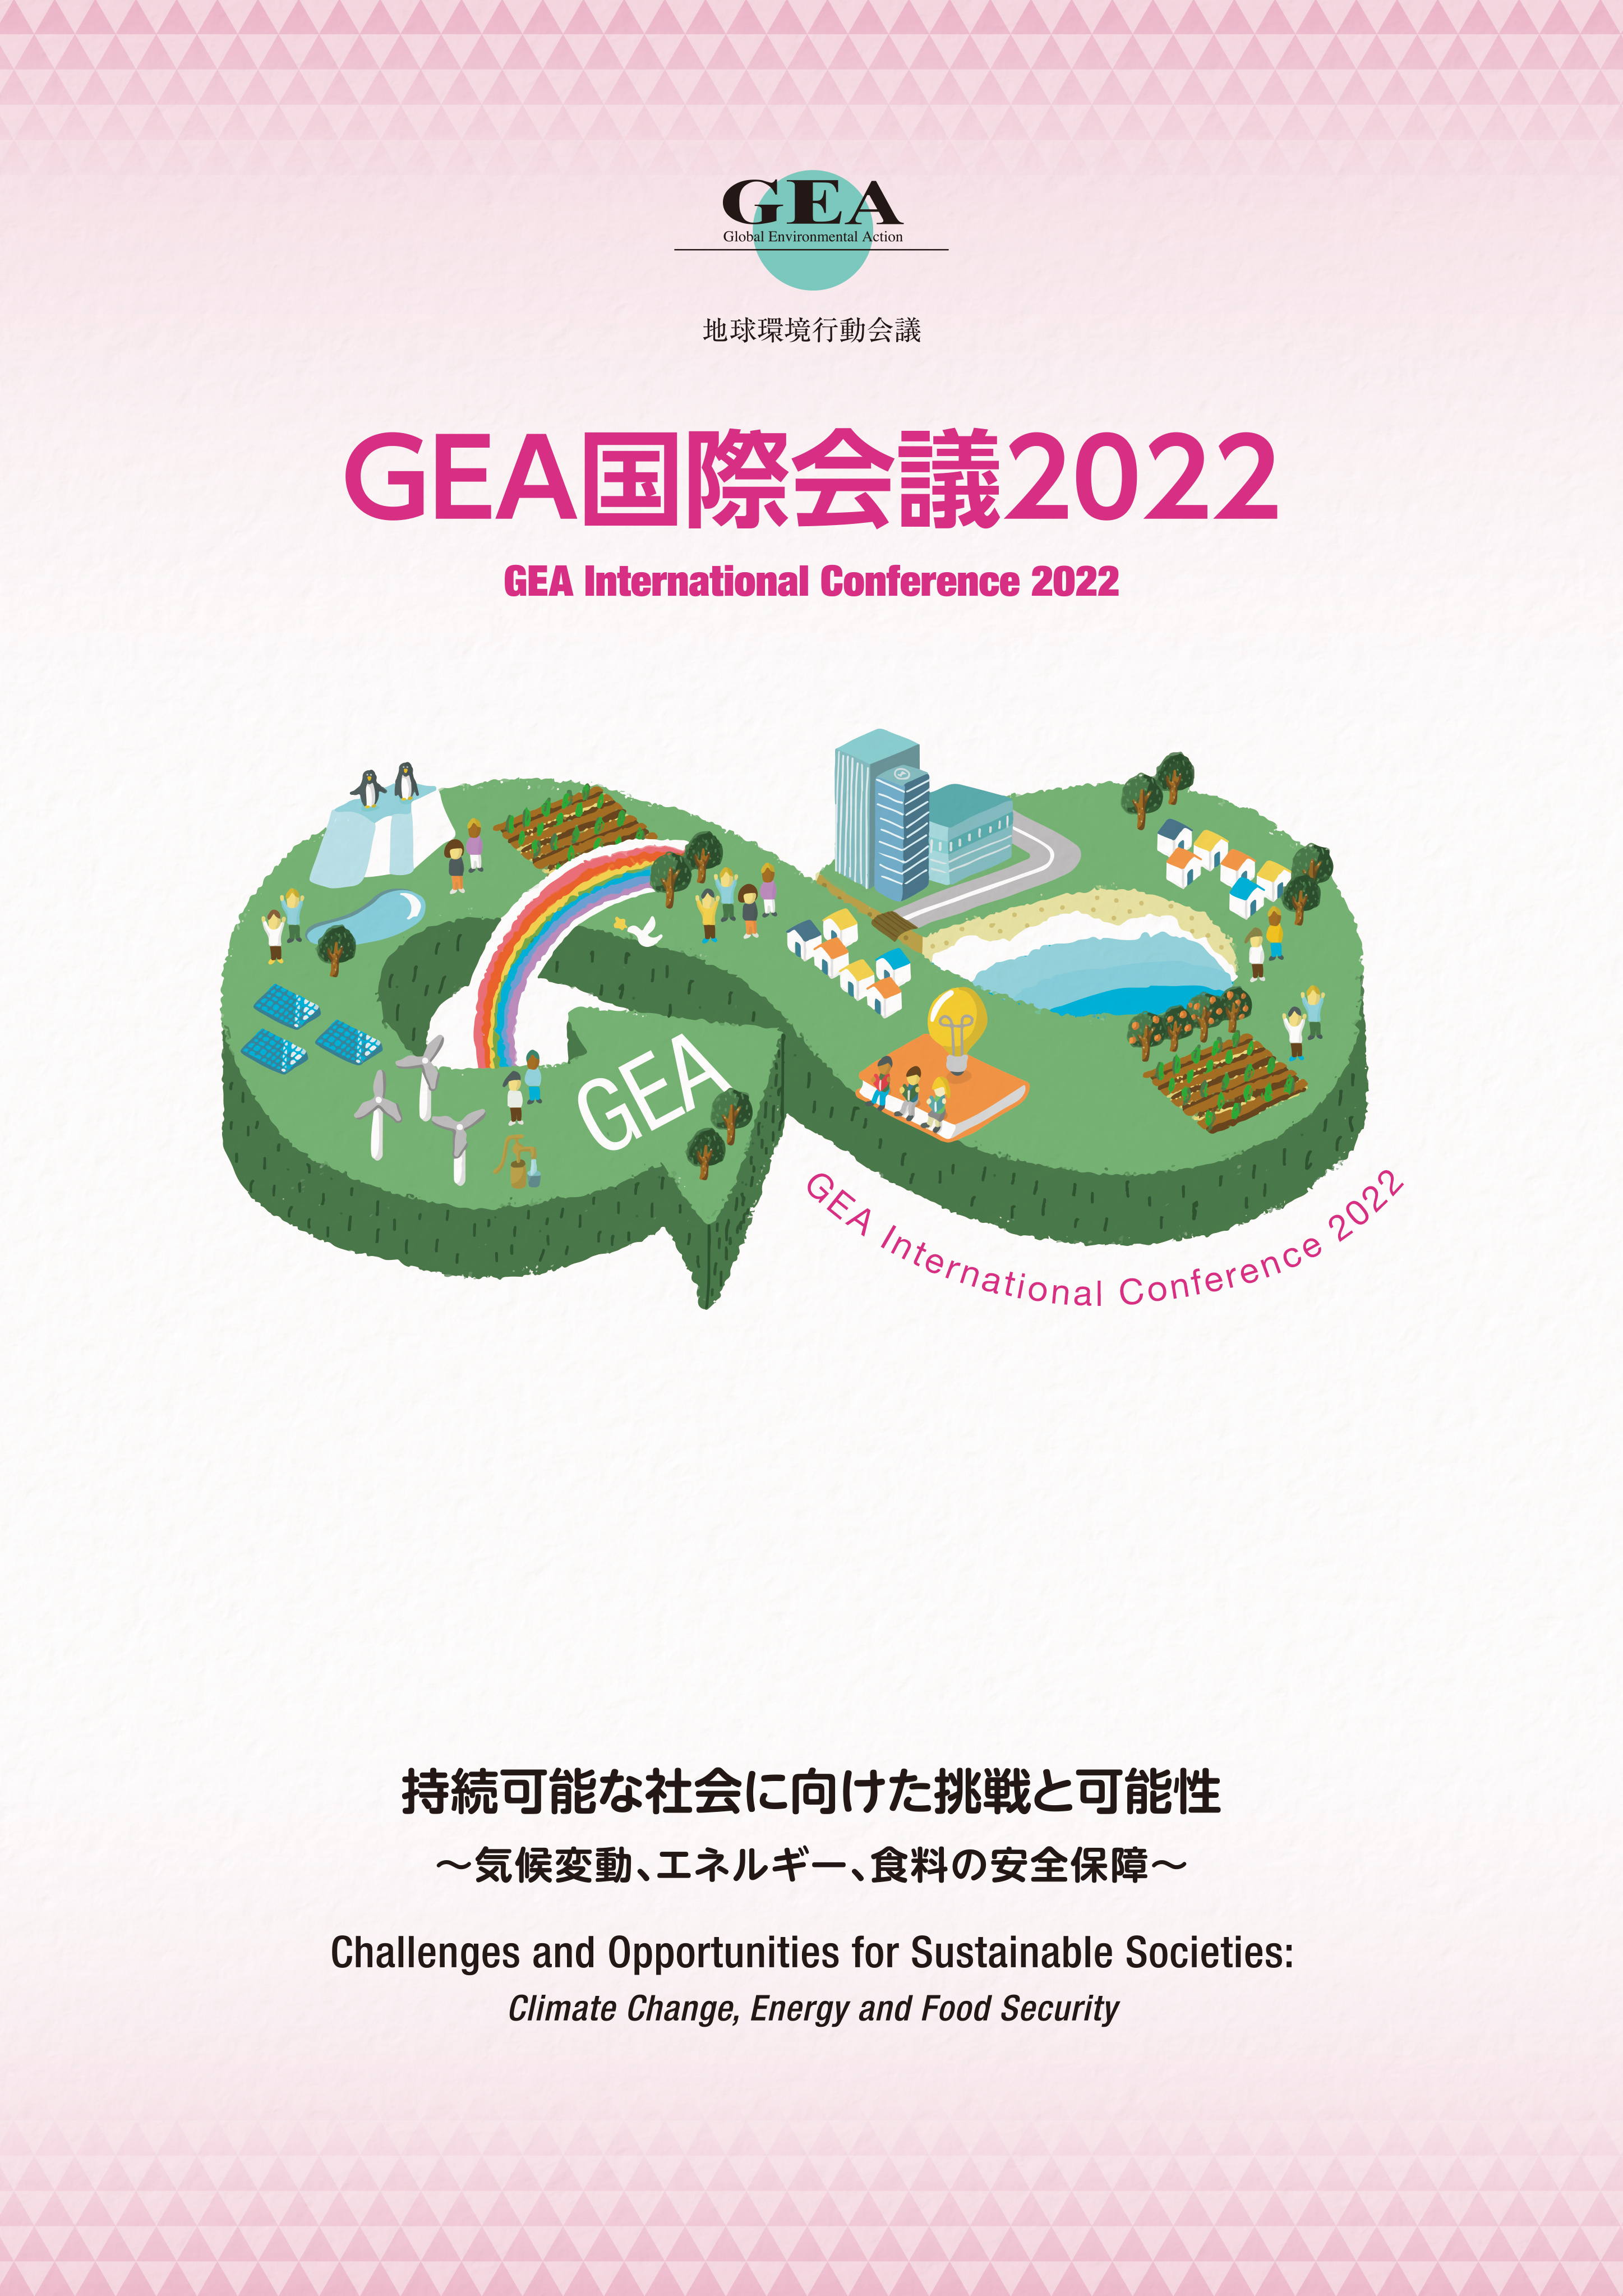 GEA International Conference 2022, Tokyo, Japan